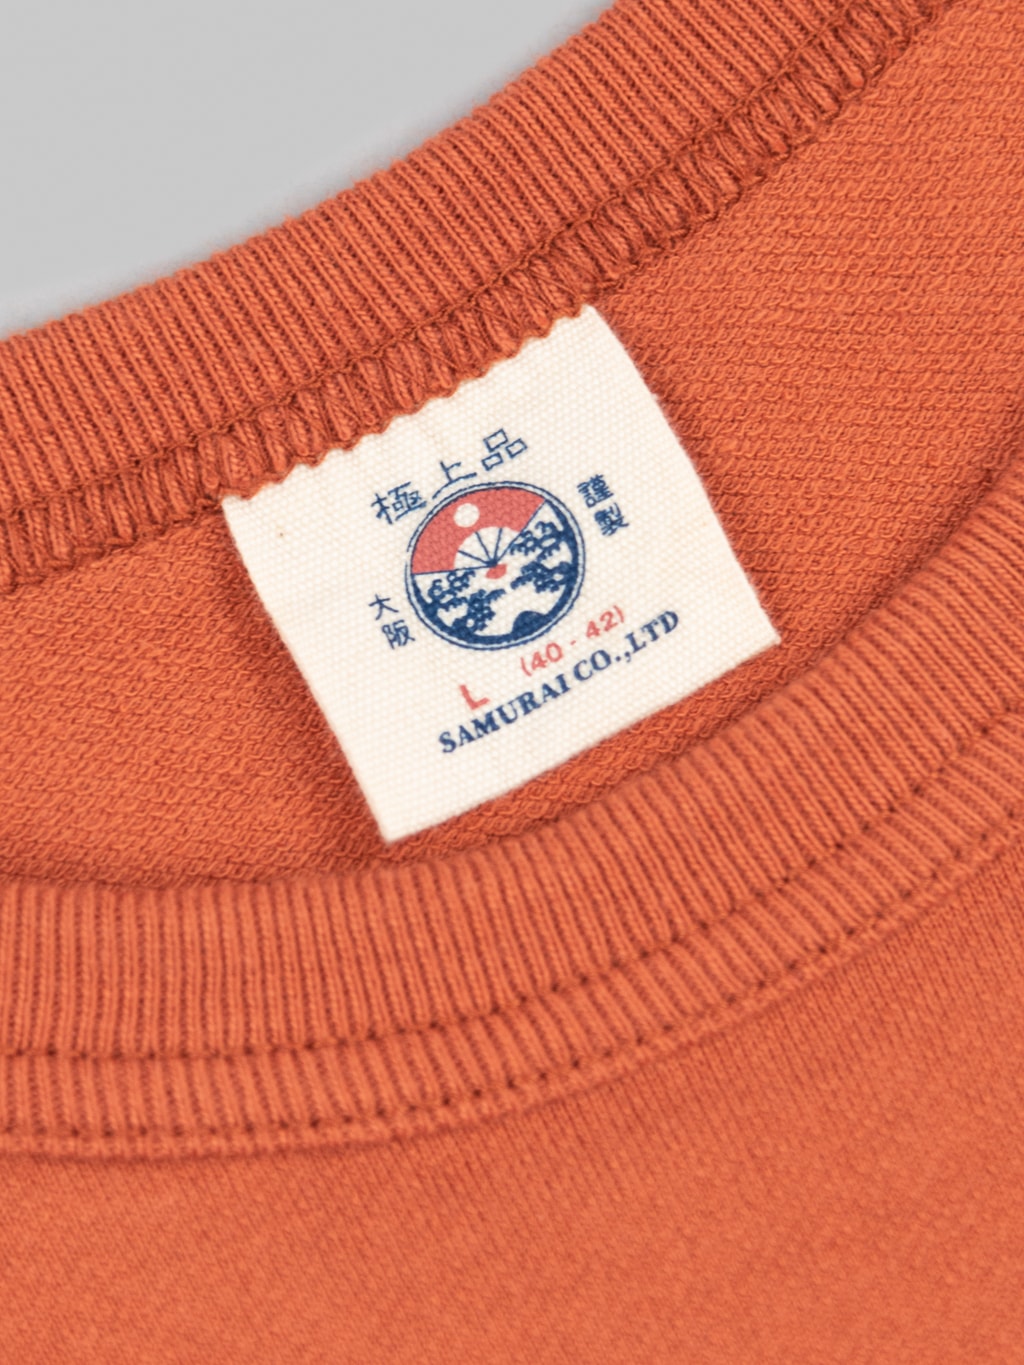 Samurai Jeans Loopwheel Ripened Cotton Tshirt brick interior label